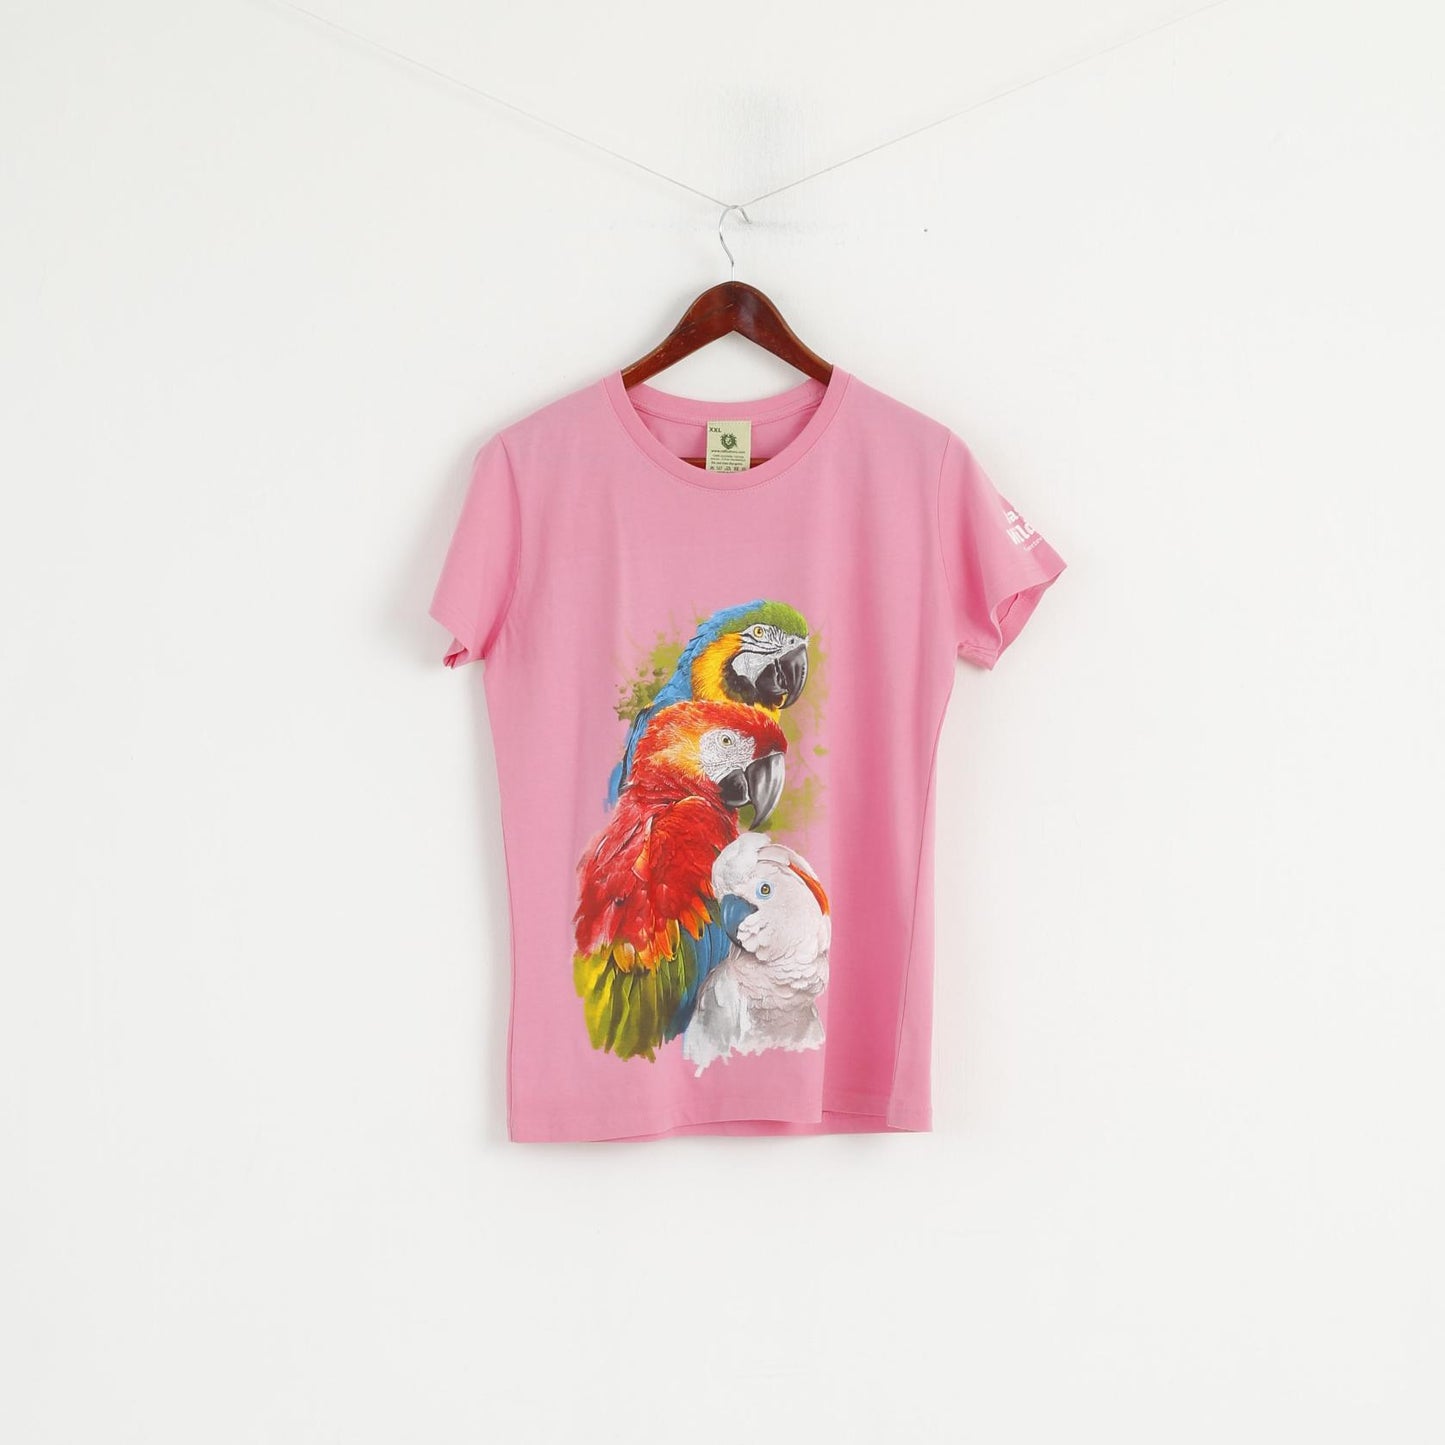 Ralf Nature Women XL Shirt Pink Cotton Parrot Oasis Wildlife Short Sleeve Top